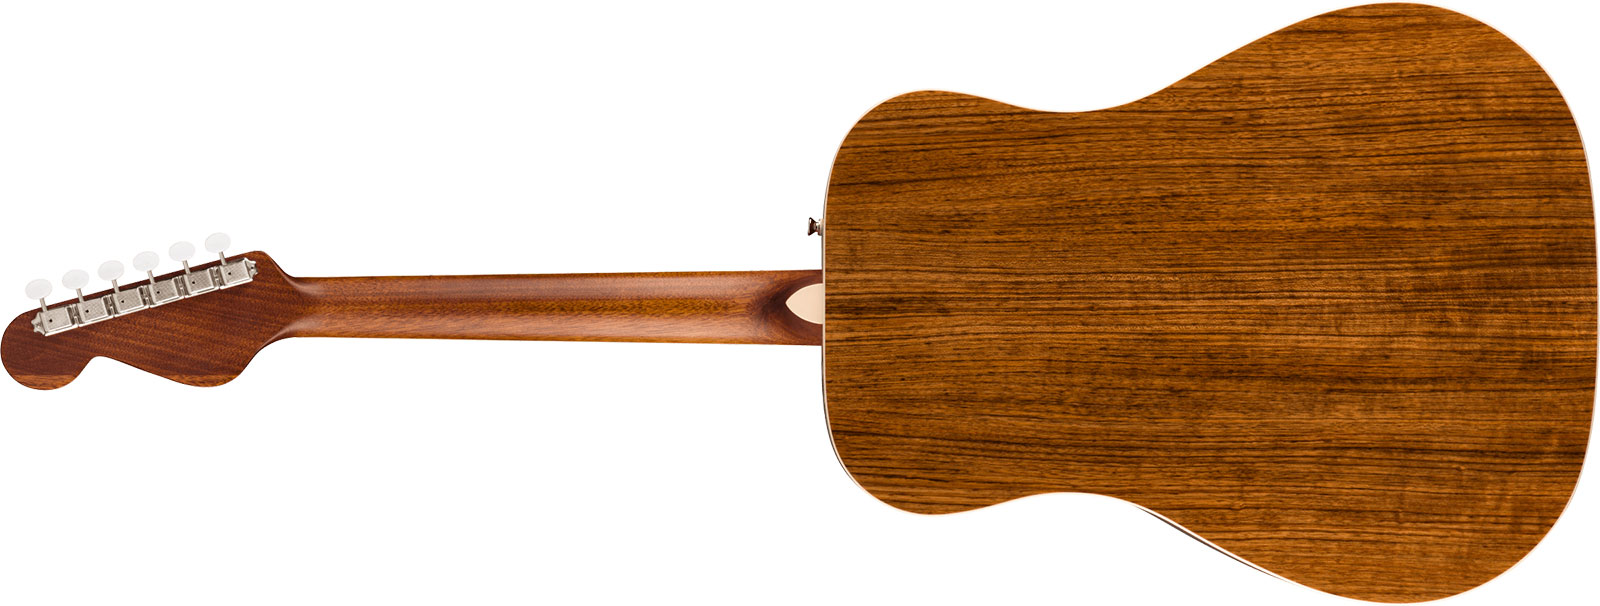 Fender King Vintage California Dreadnought Epicea Ovangkol Ova - Aged Natural - Electro acoustic guitar - Variation 1